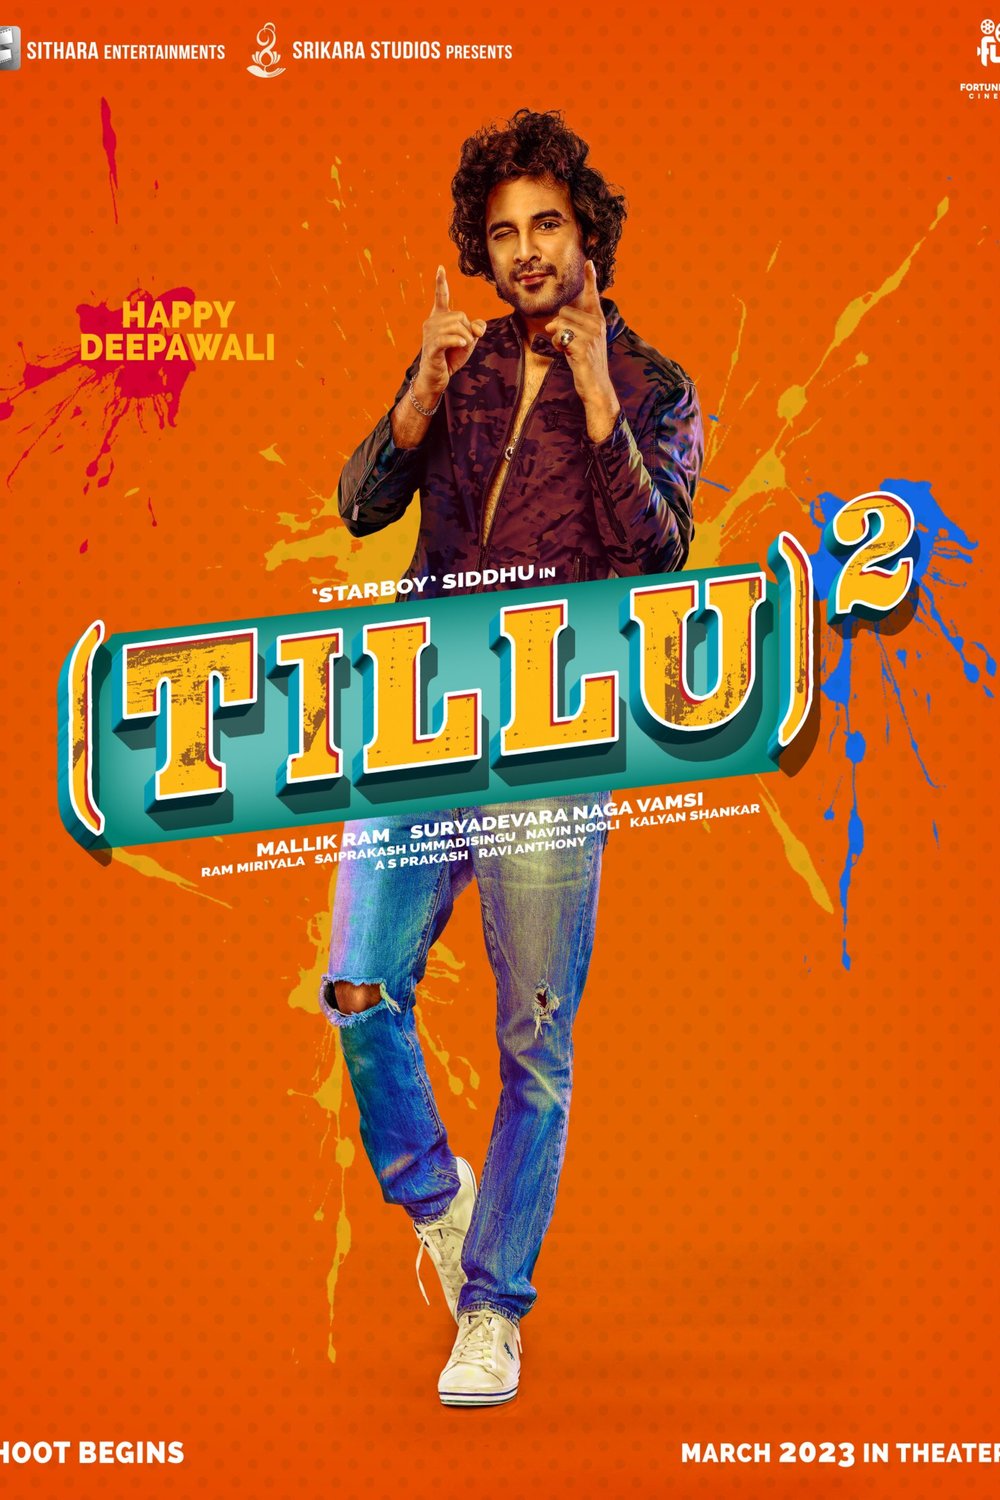 Telugu poster of the movie Tillu²